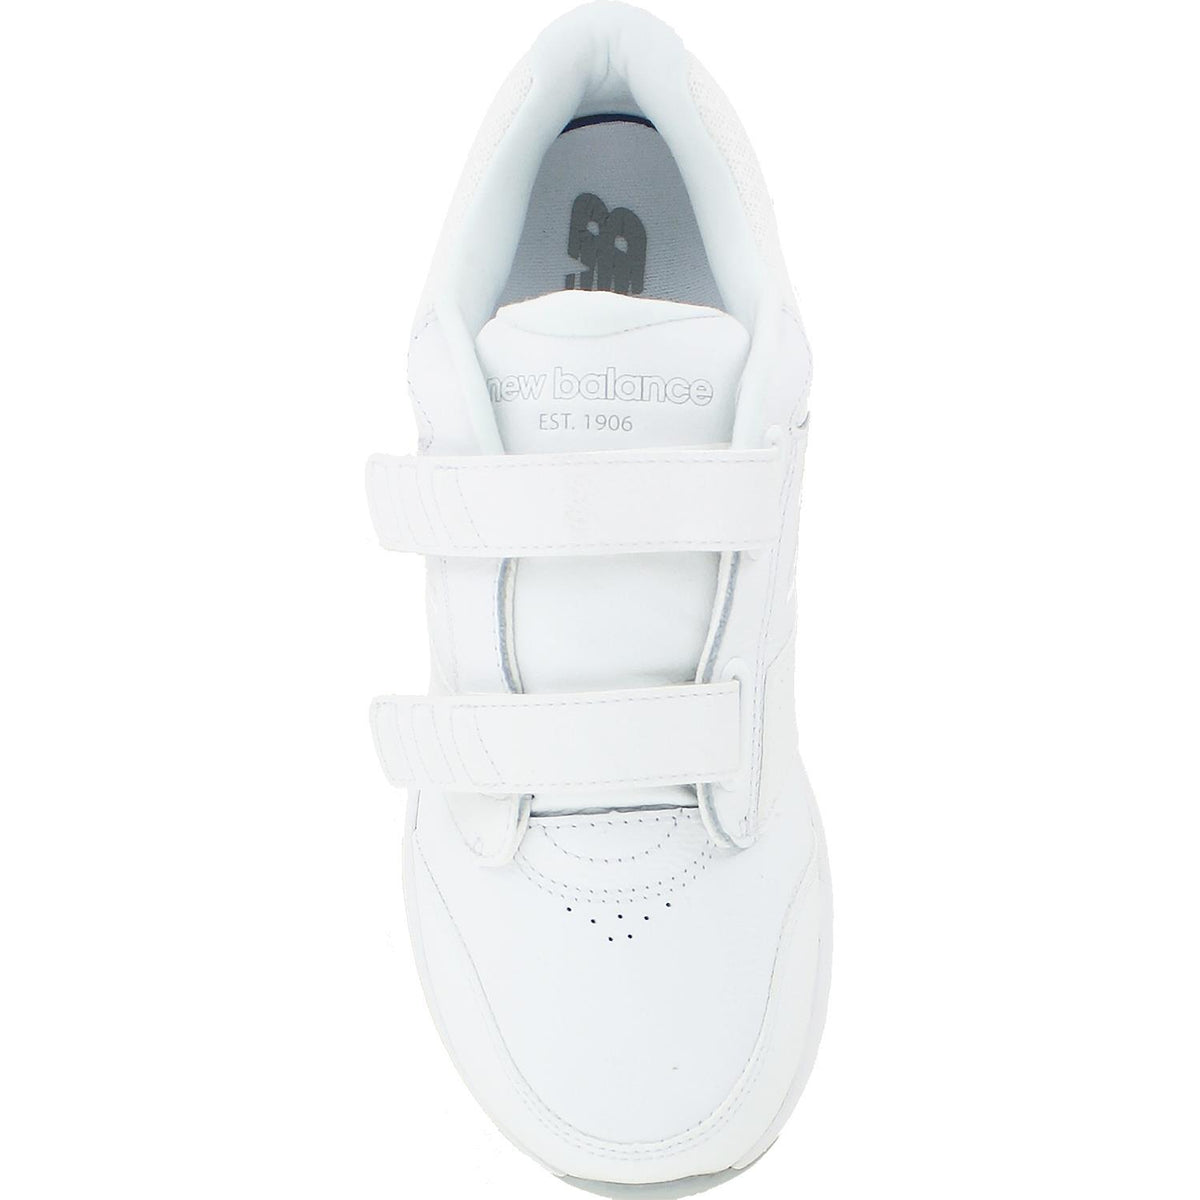 New Balance® 577 Velcro Walking Shoes King Size, 57% OFF